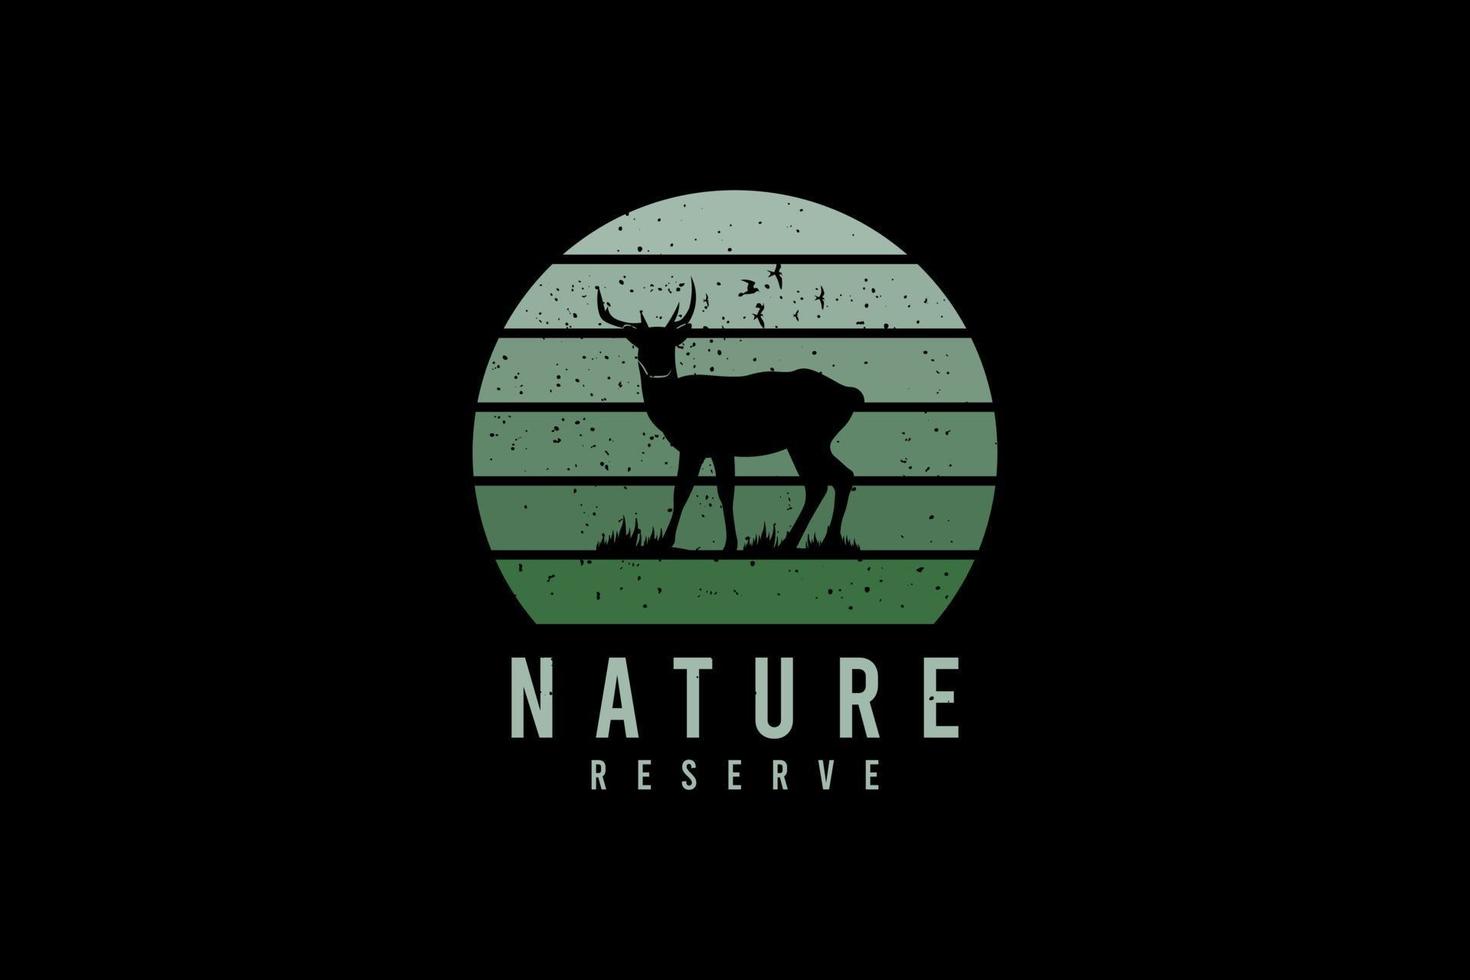 naturreservat, t -shirt merchandise siluett vektor